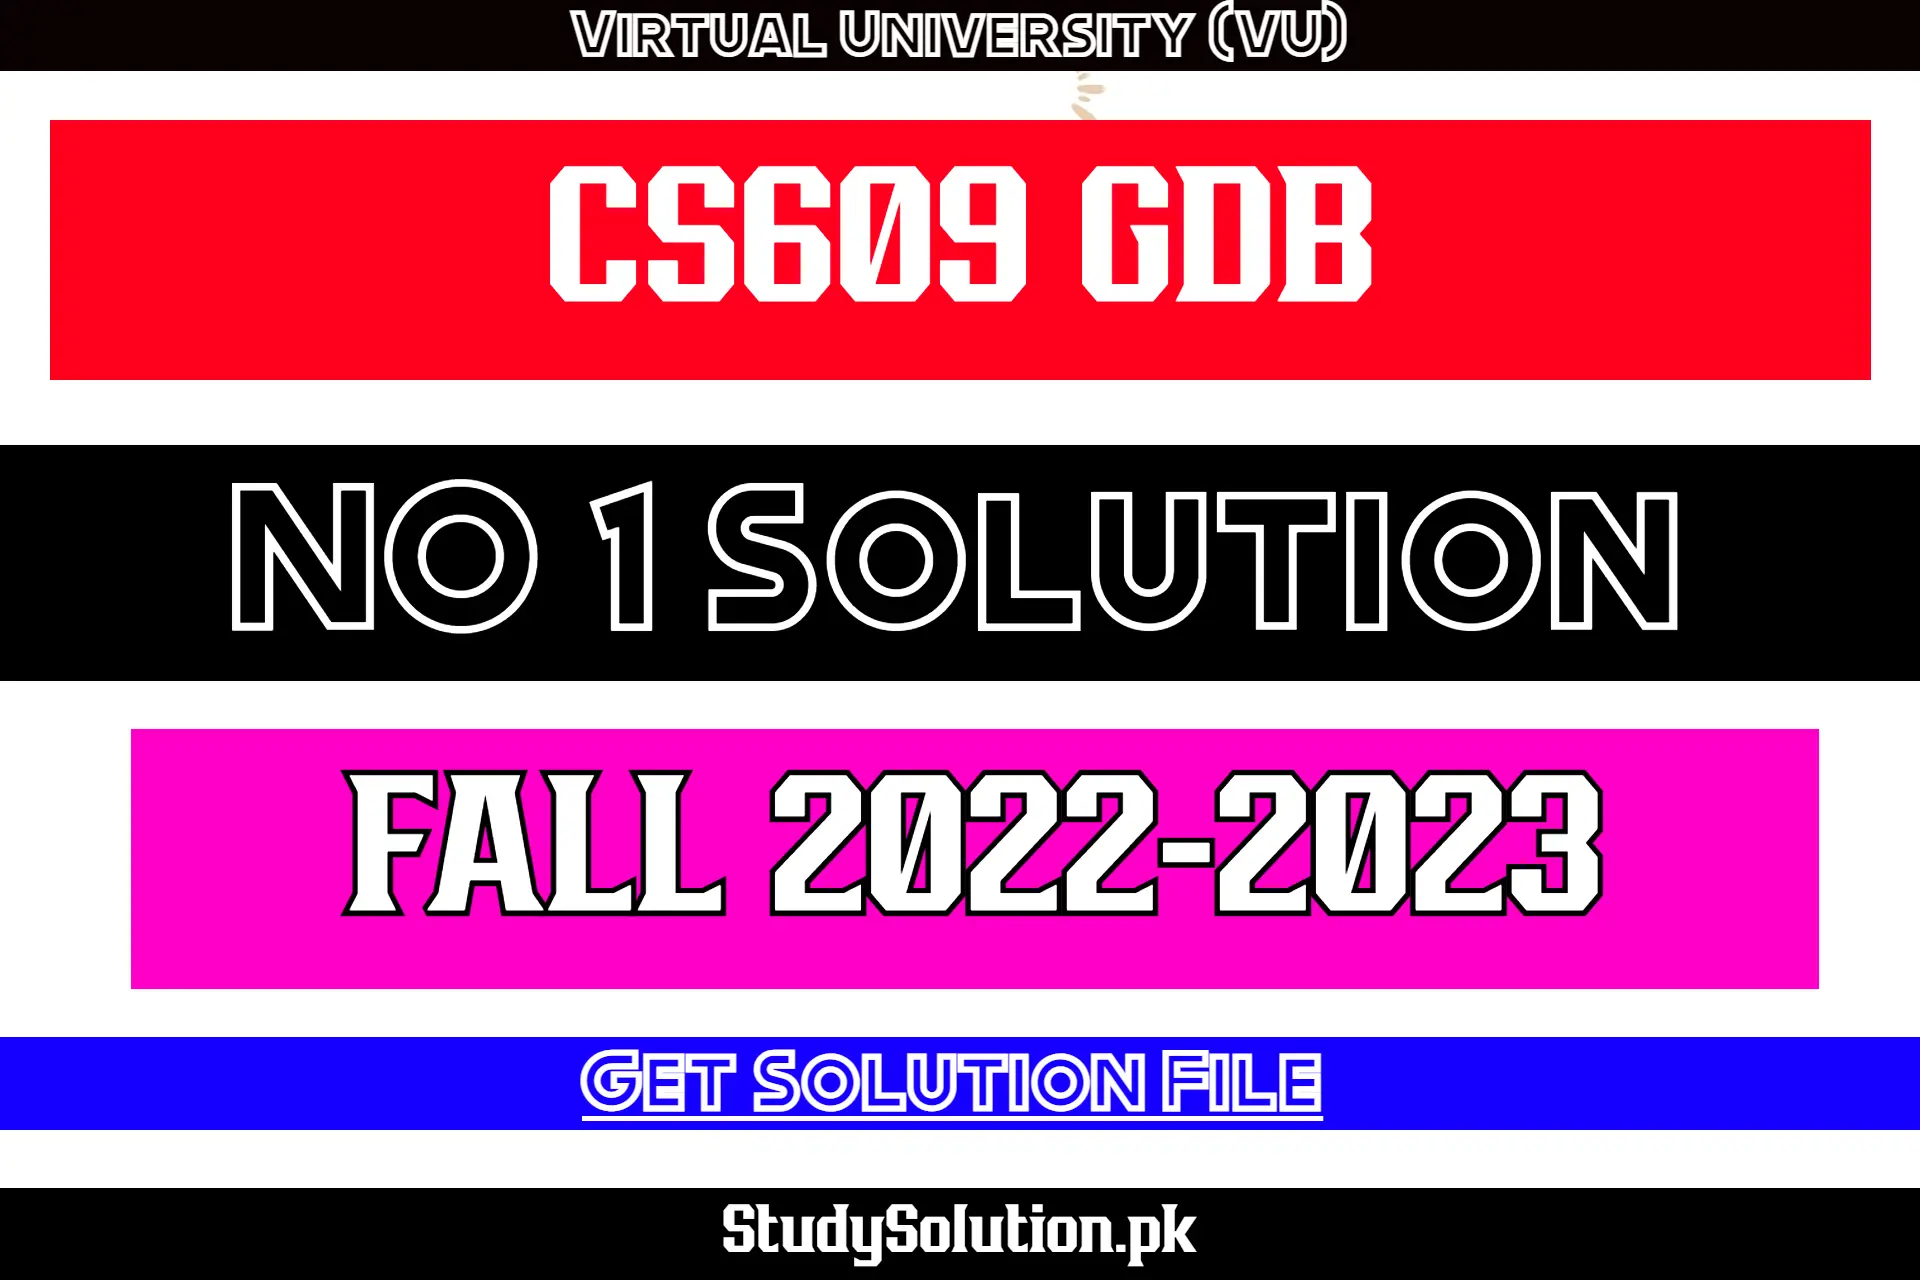 CS609 GDB No 1 Solution Fall 2022